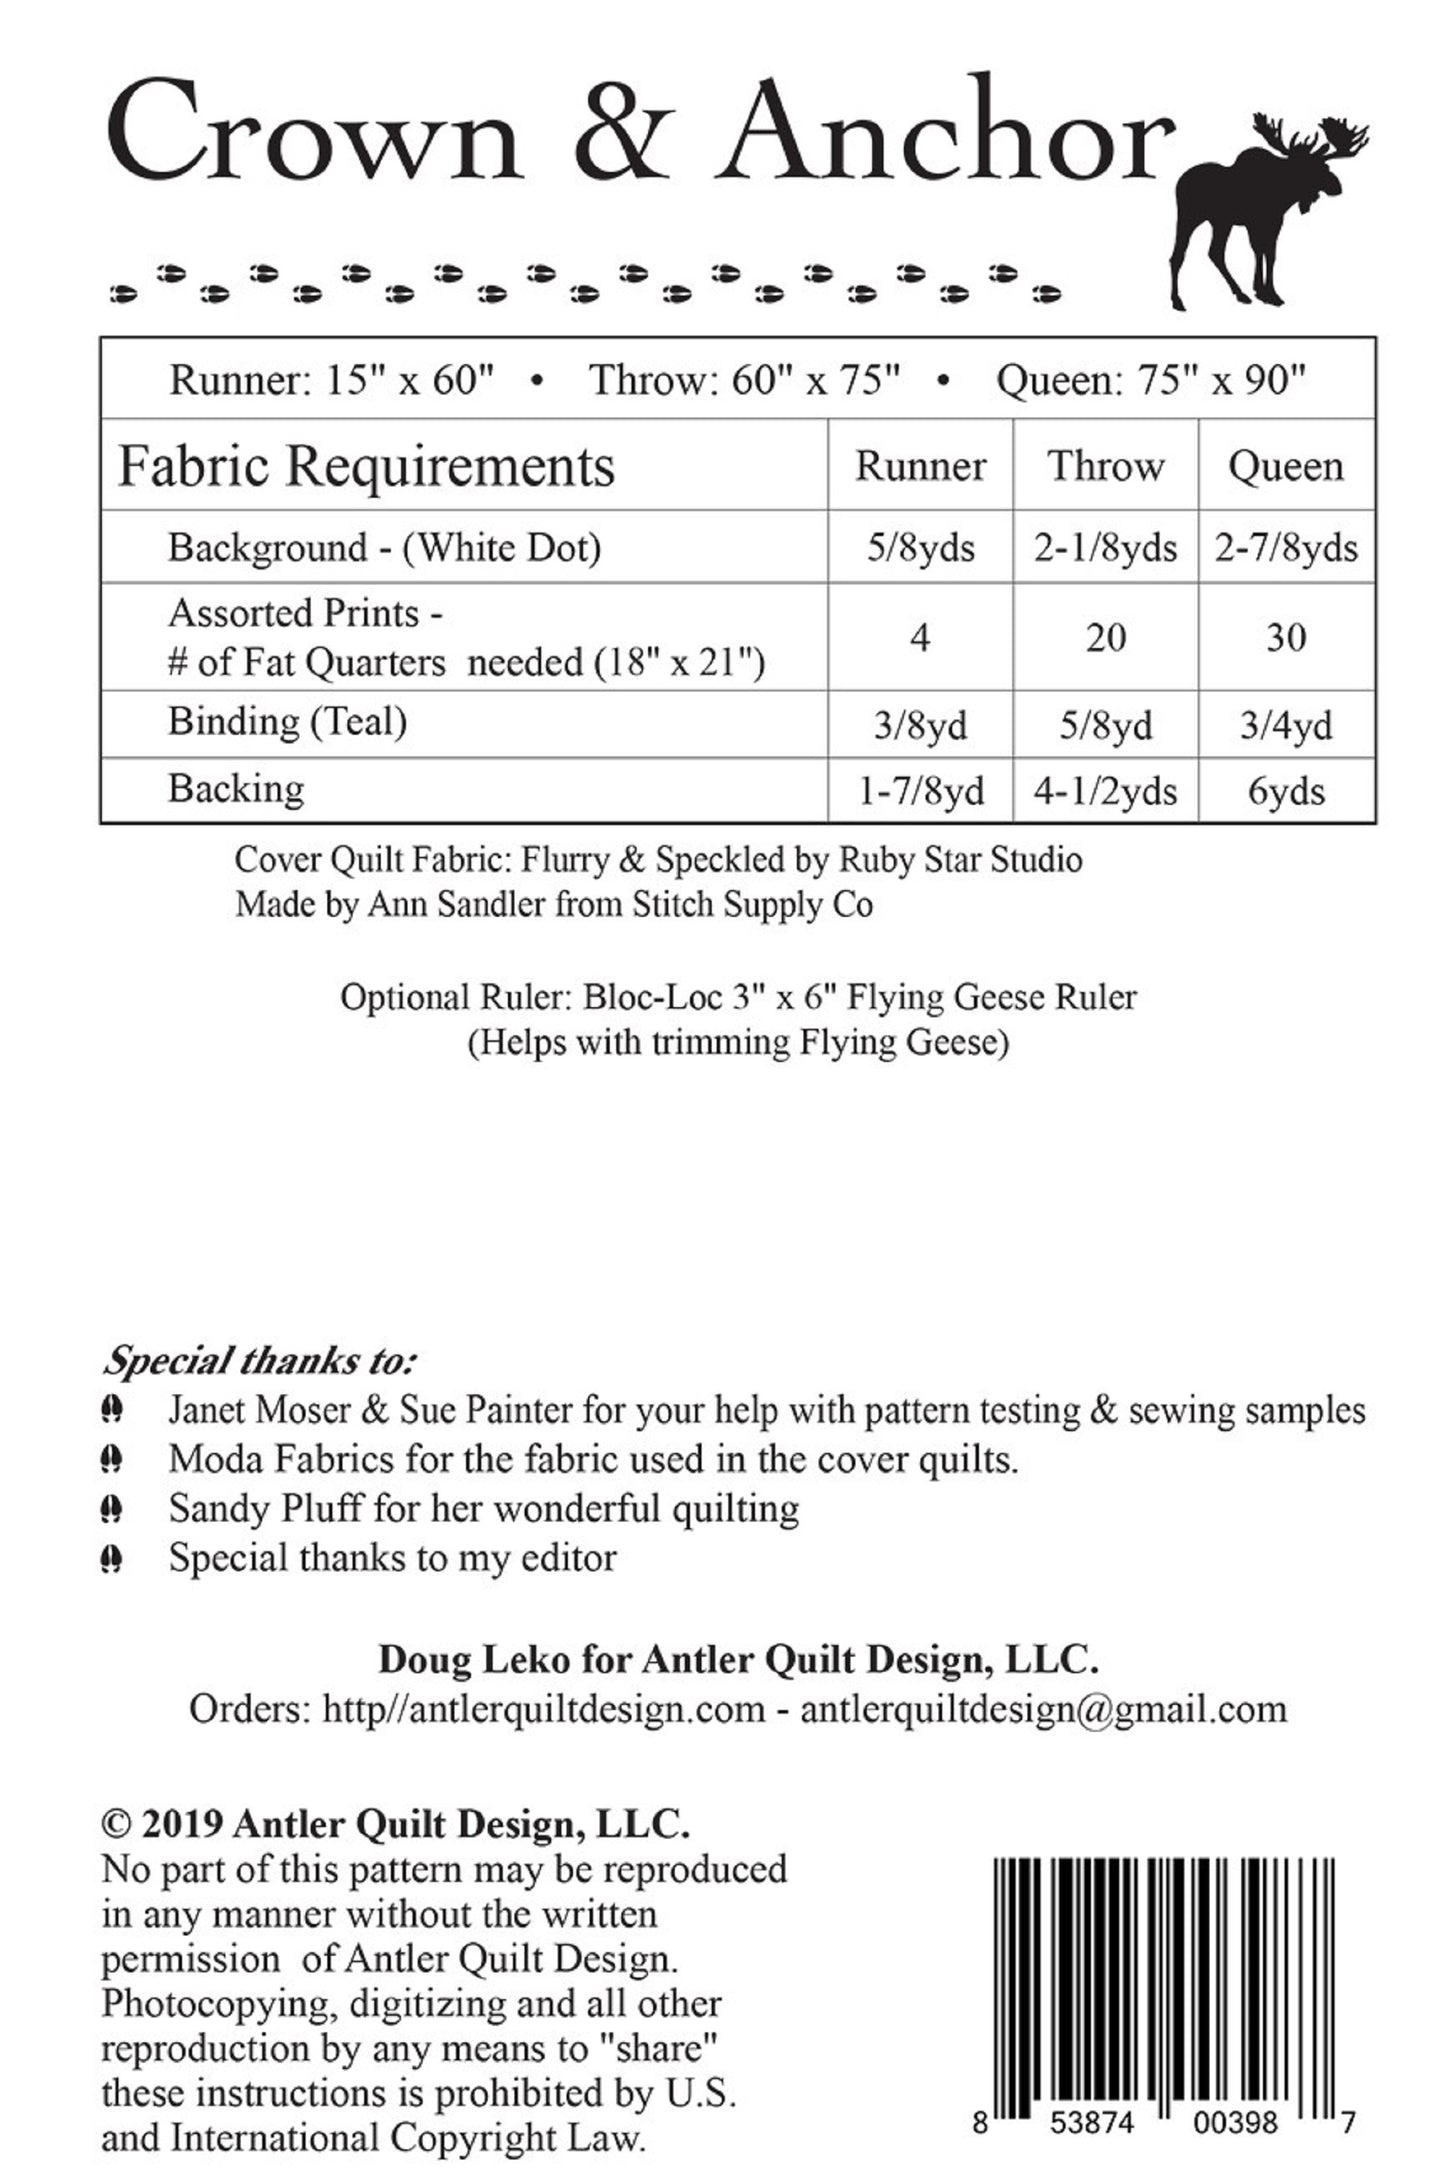 Crown & Anchor Quilt Pattern by Doug Leko-Antler Quilt Design